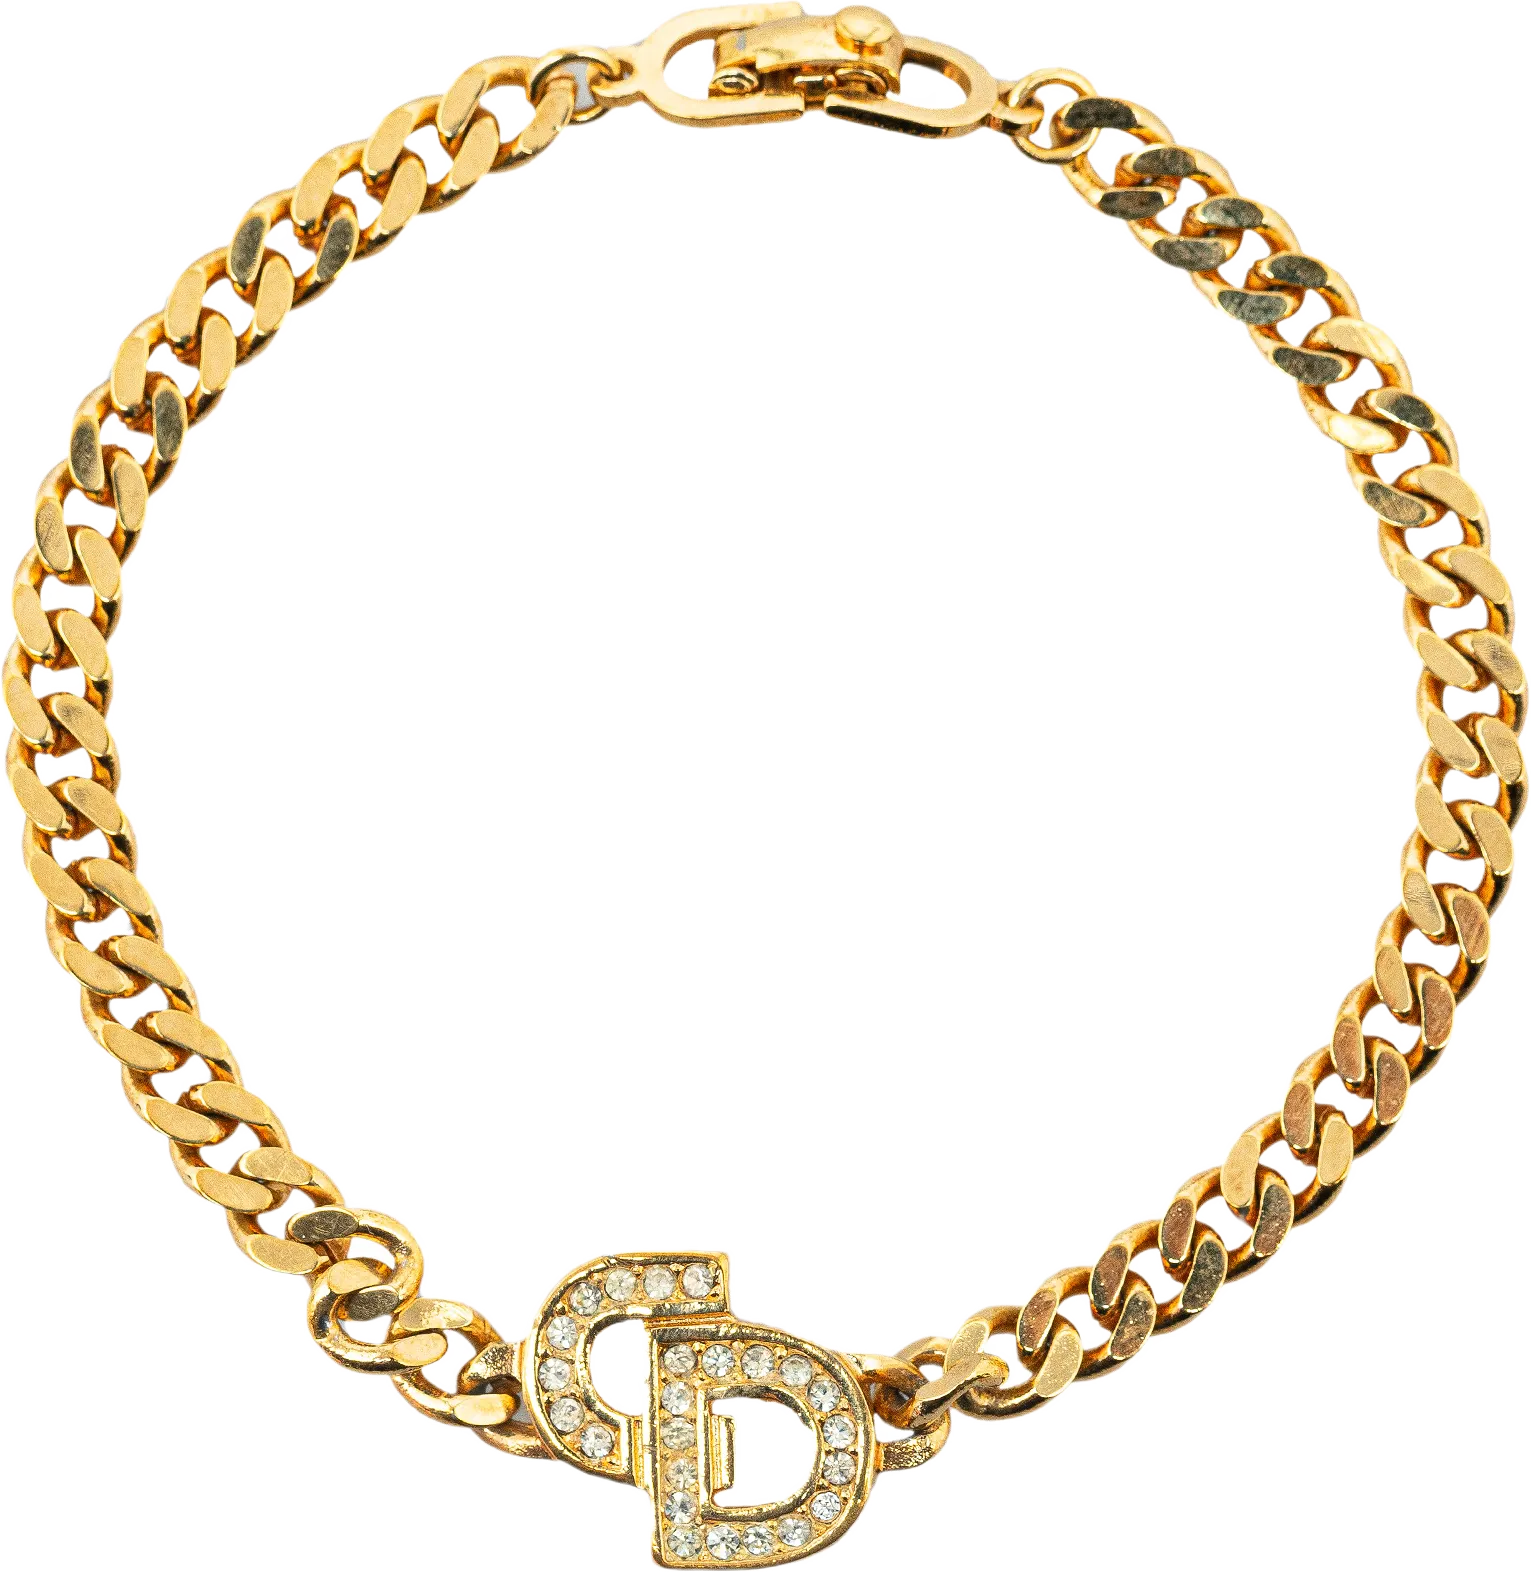 Dior Logo Rhinestone Bracelet